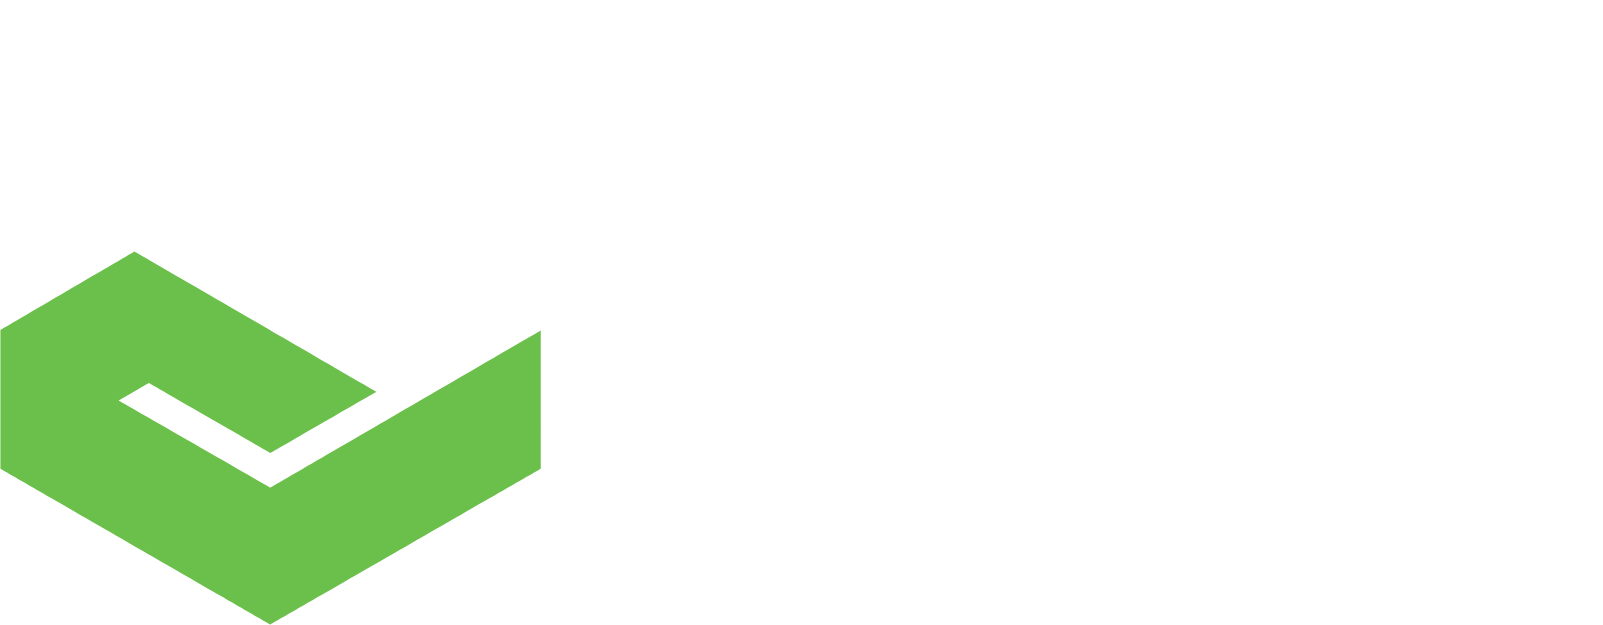 PTC logo large for dark backgrounds (transparent PNG)